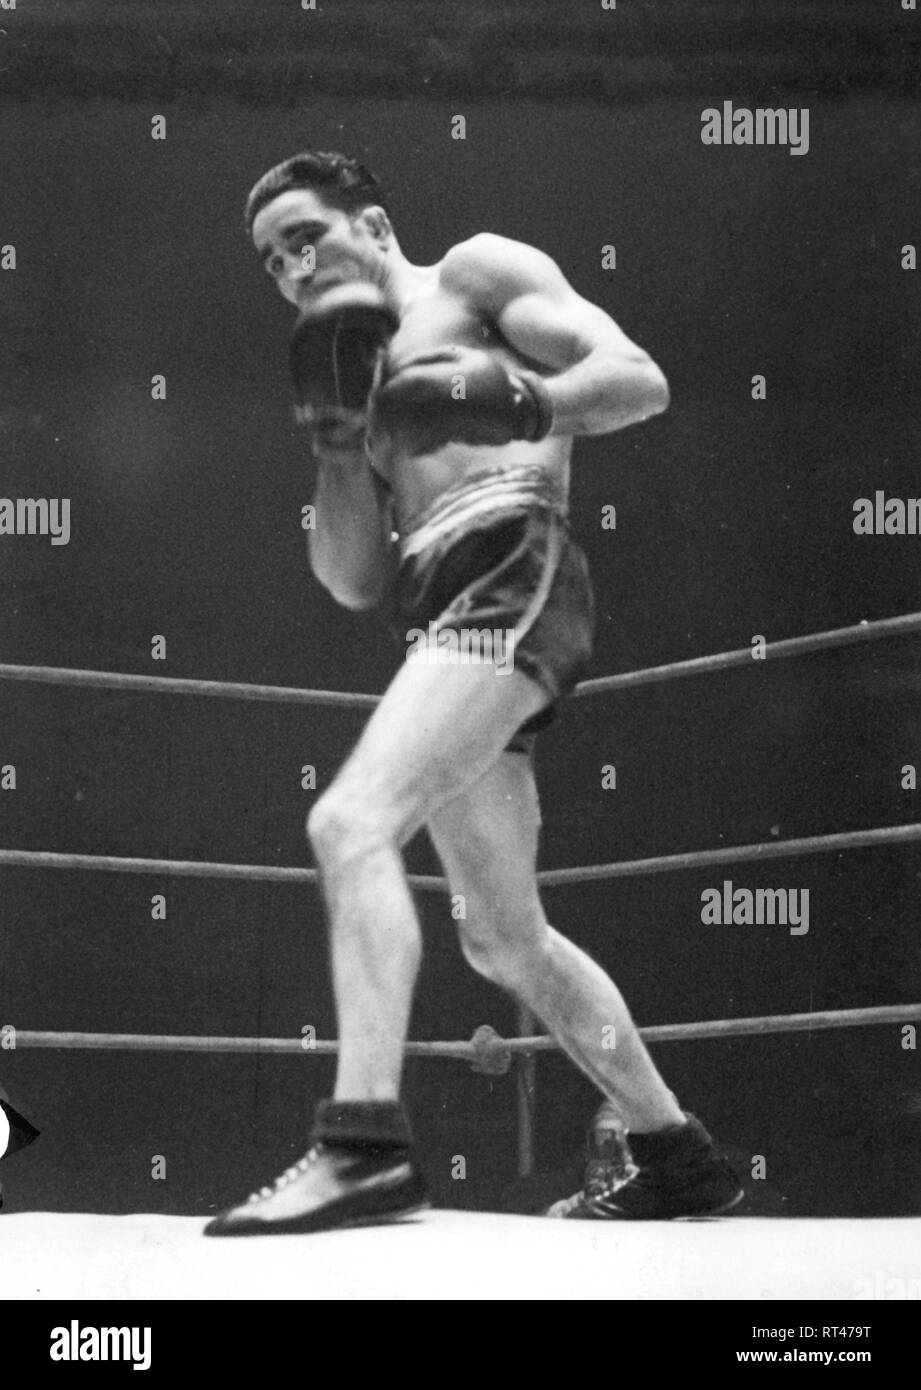 Fernandez, Luis, * 21.11.1921, spanischer Boxer, während der Kampf gegen Nazzareno Giannelli, Palais des Sports, Paris, 23.2.1948, Additional-Rights - Clearance-Info - Not-Available Stockfoto